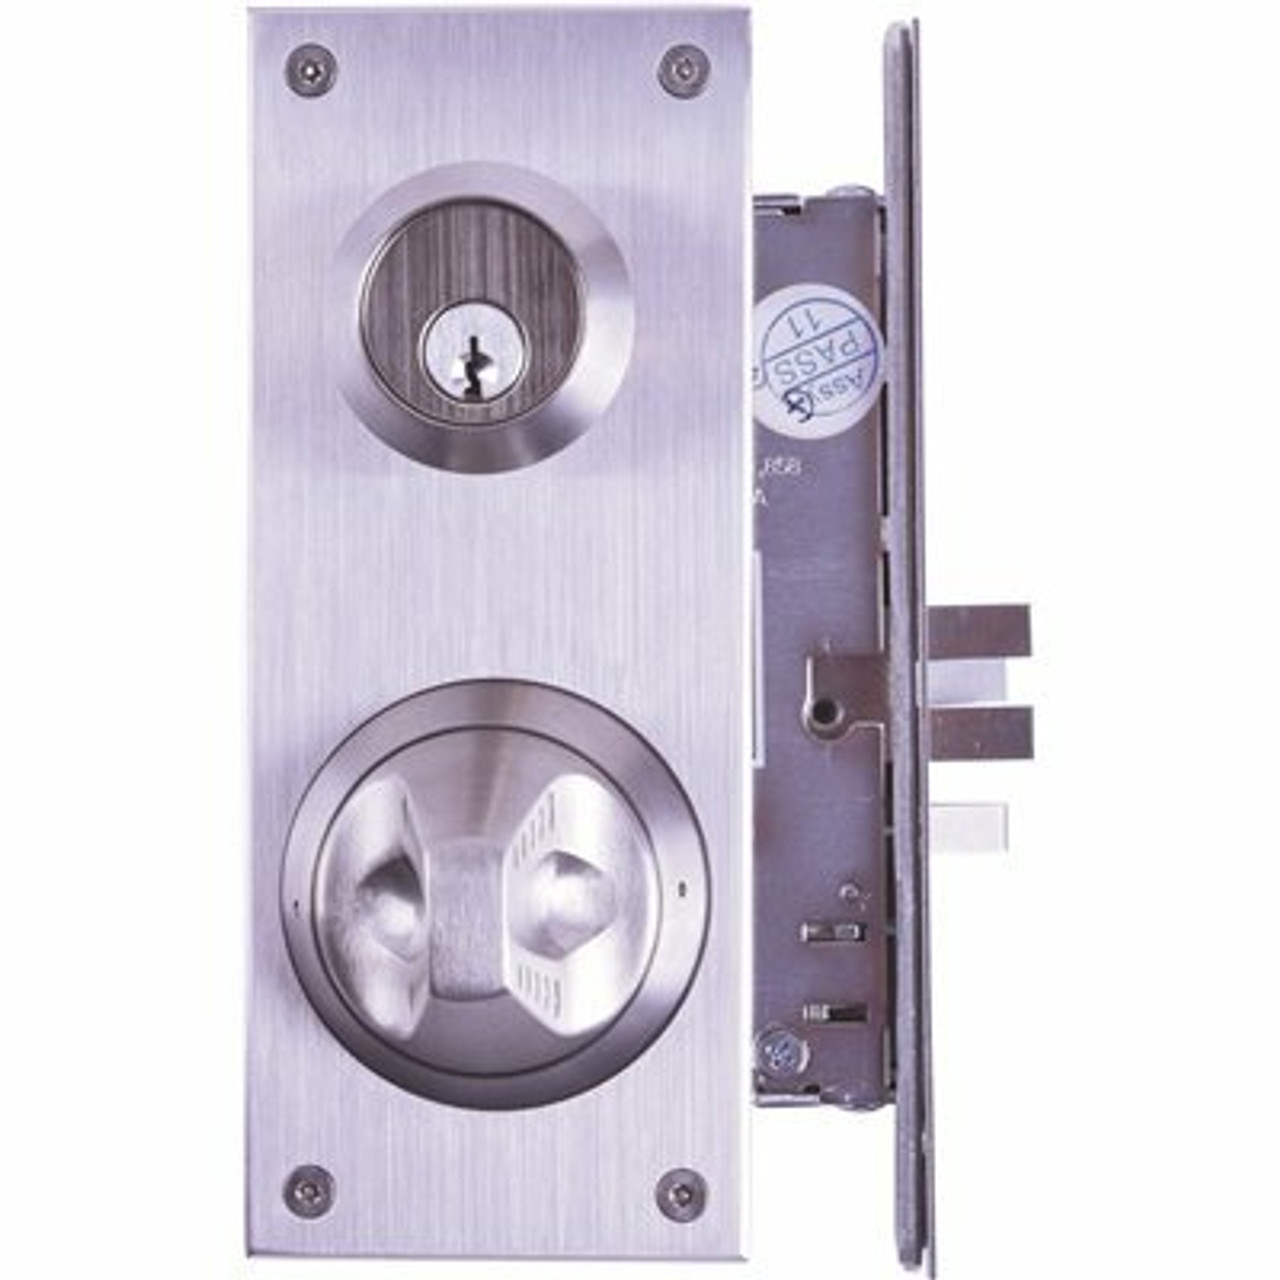 Townsteel Mrxe Series Ligature Resistant Stainless Steel Mortise Lock Escutcheon Knob Trim - 309069011